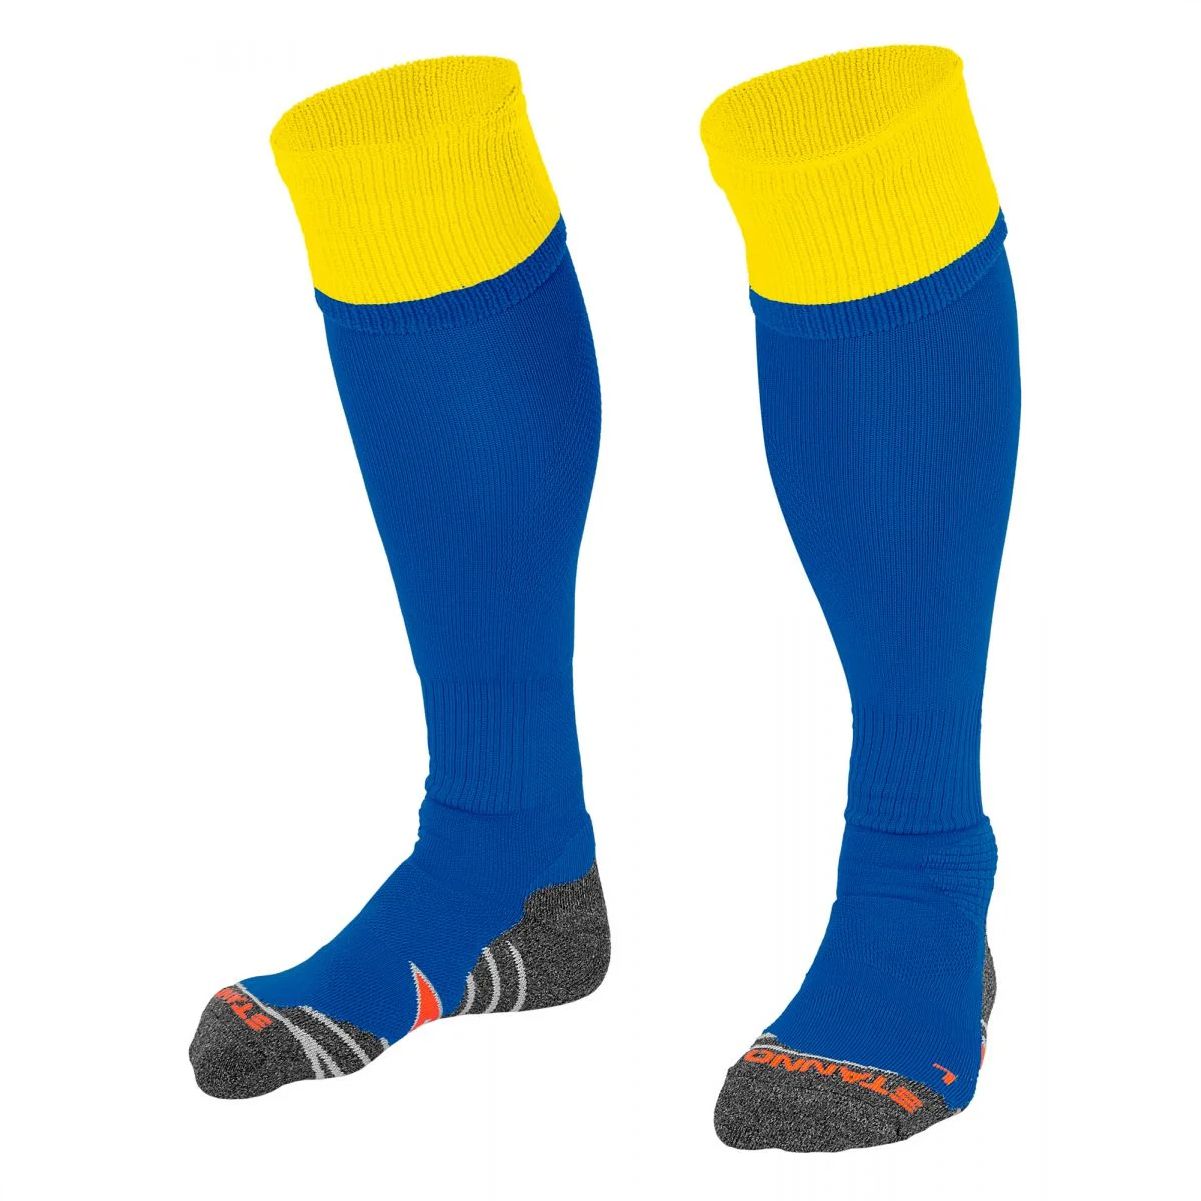 Stanno - Combi Socks - Royal & Yellow